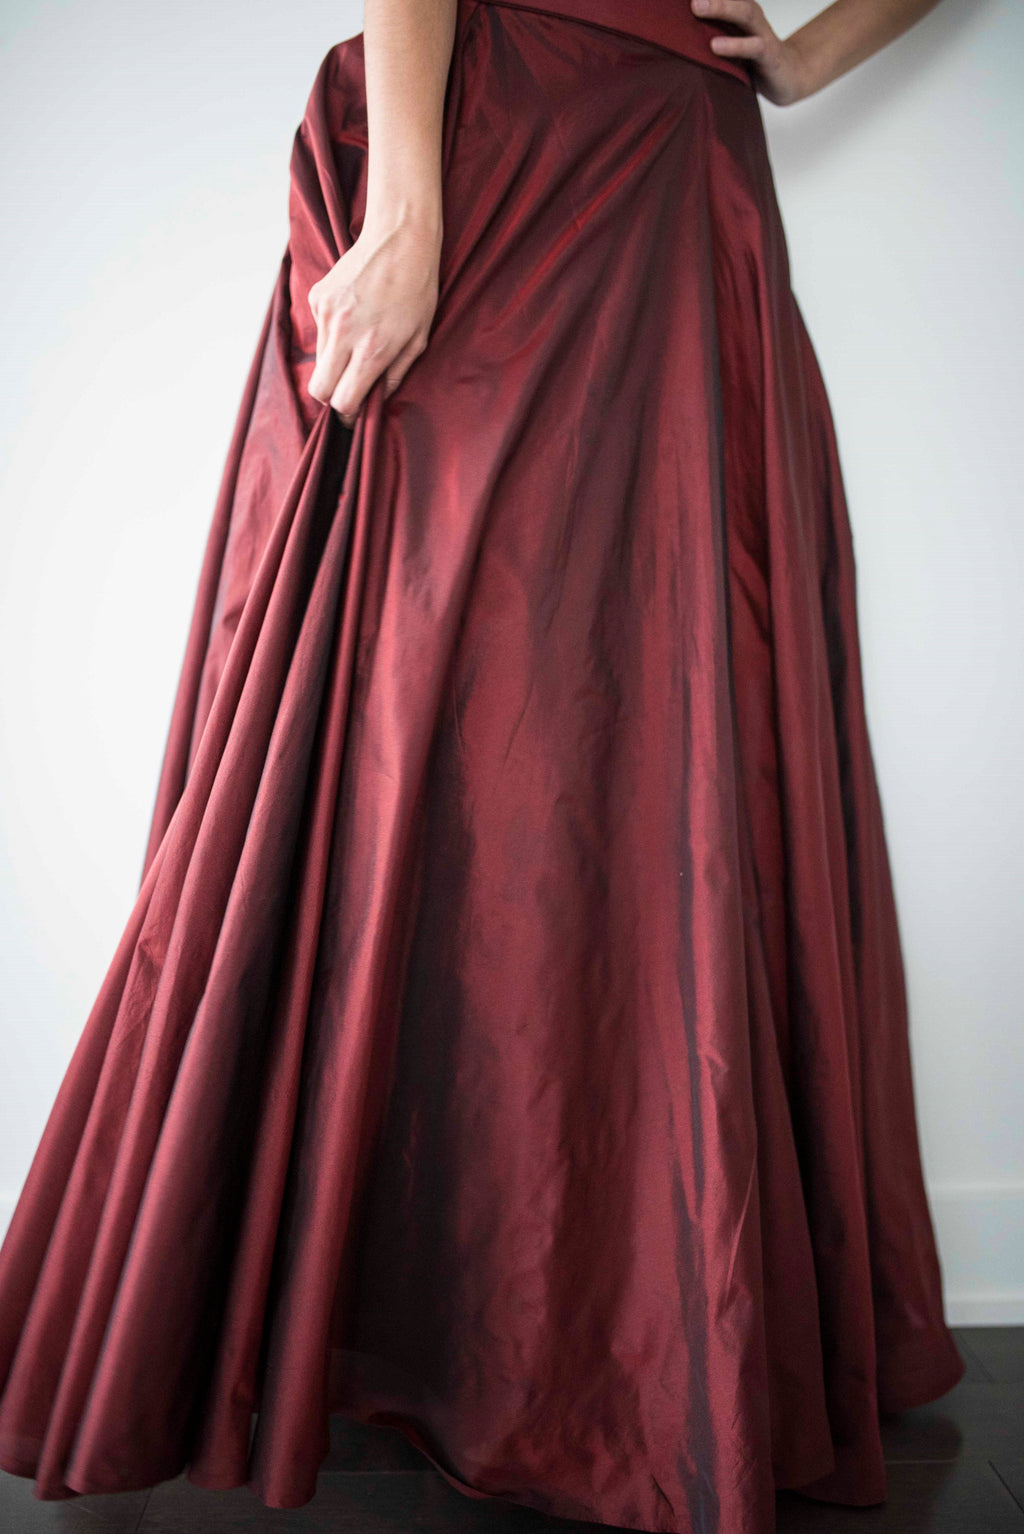 bZAI Classic Lengha Skirt- Red Wine